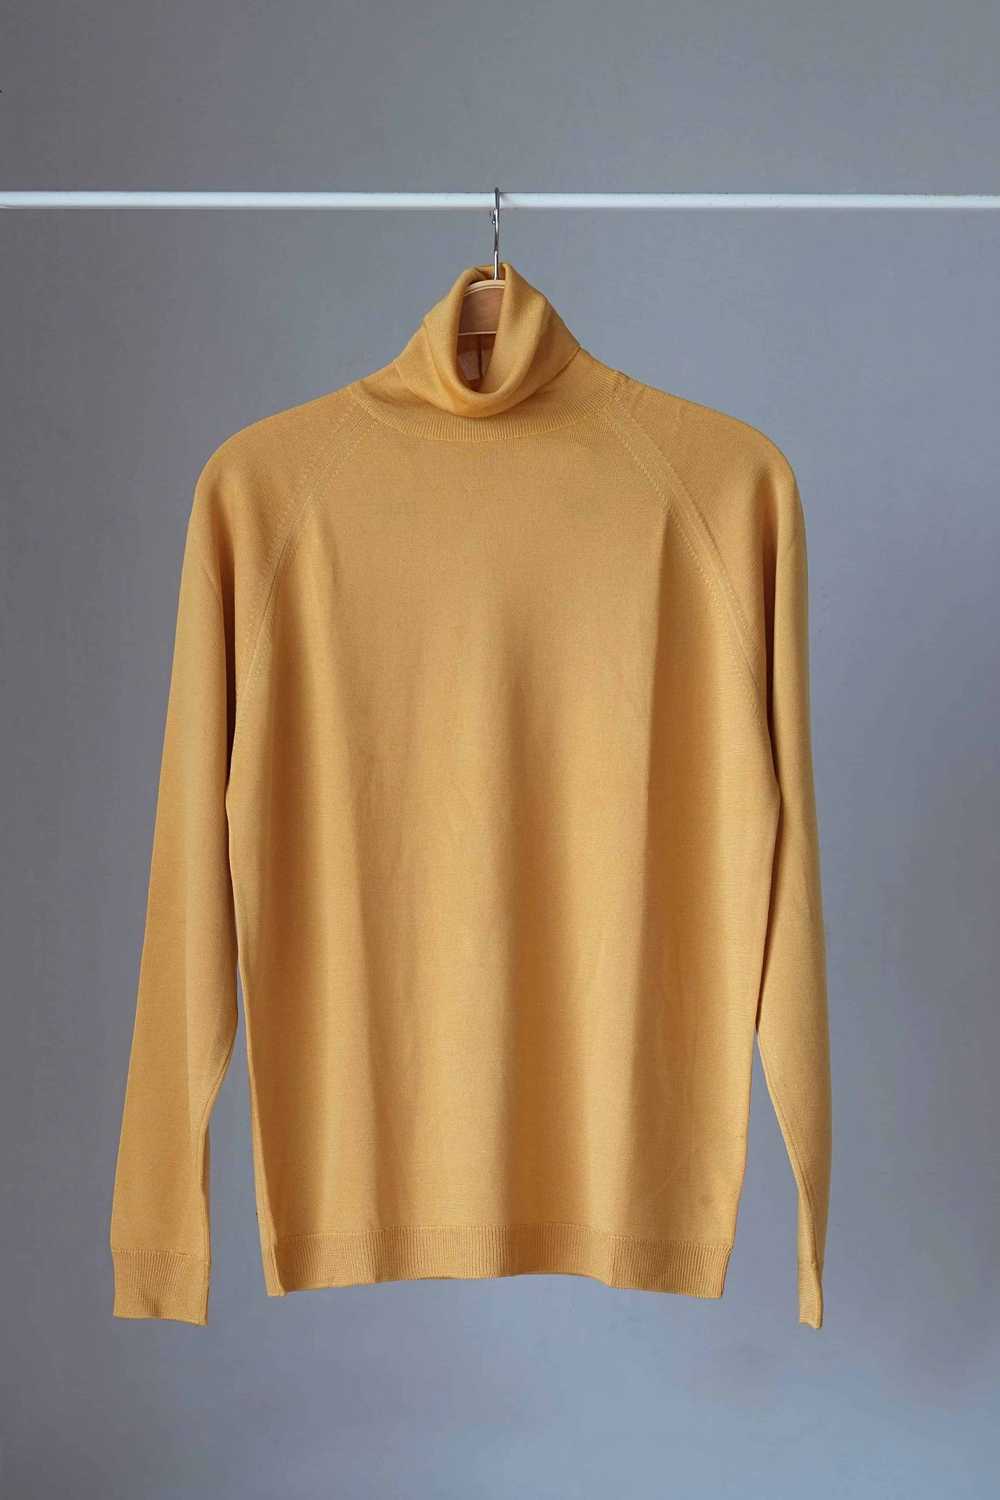 MORLEY 70's Turtleneck Sweater - image 2